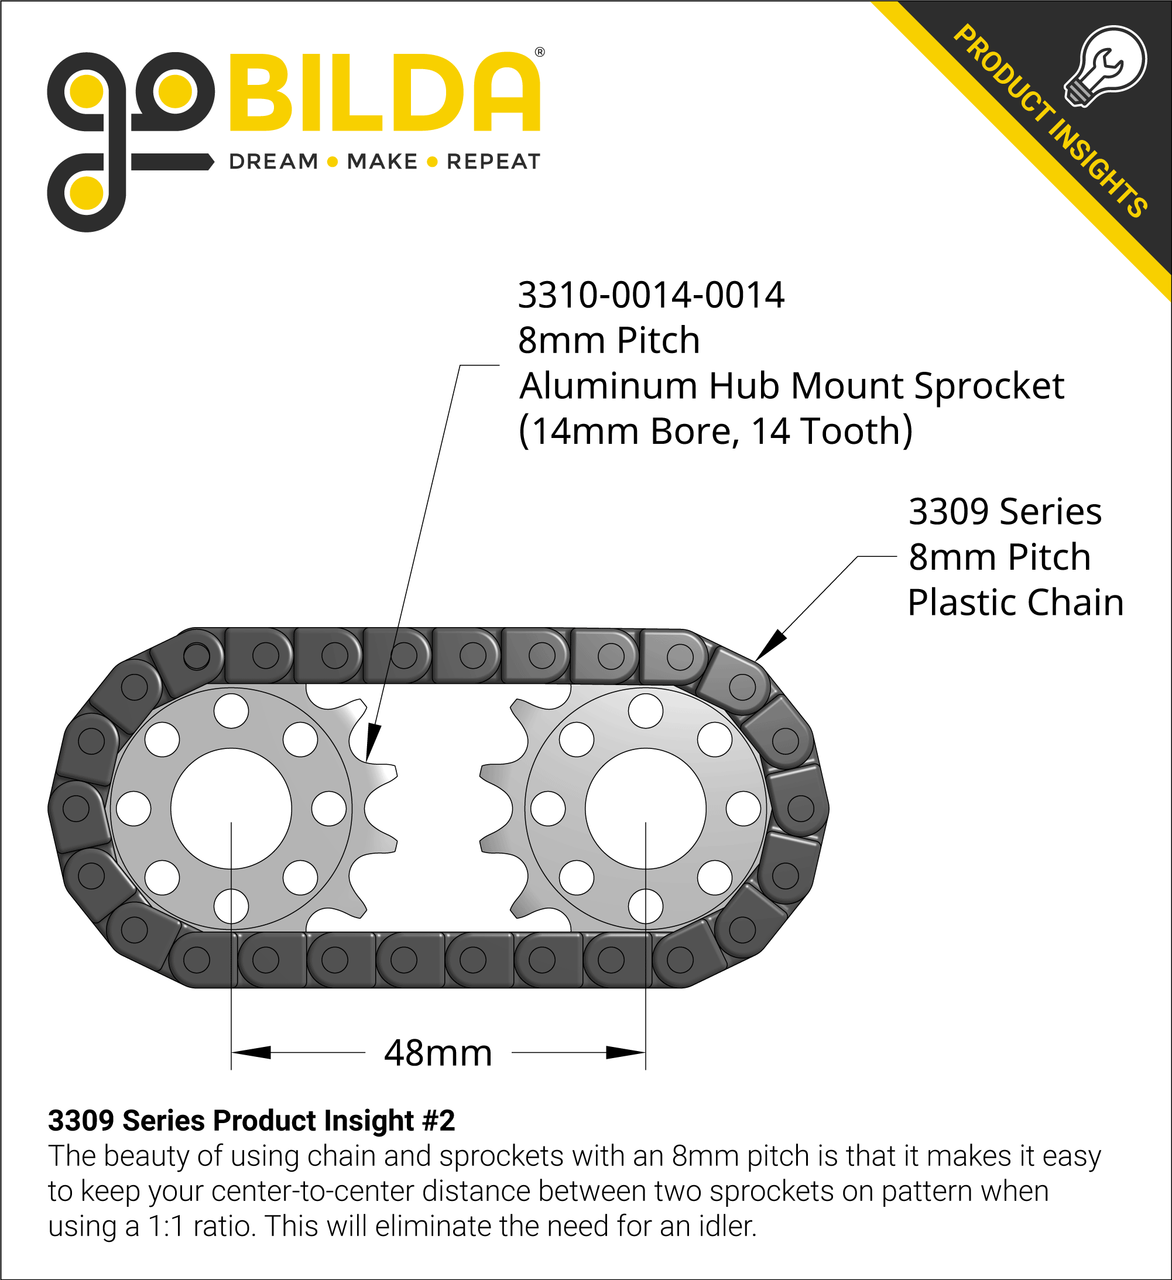 3309 Series 8mm Pitch Plastic Chain (50 Links/400mm, Black)